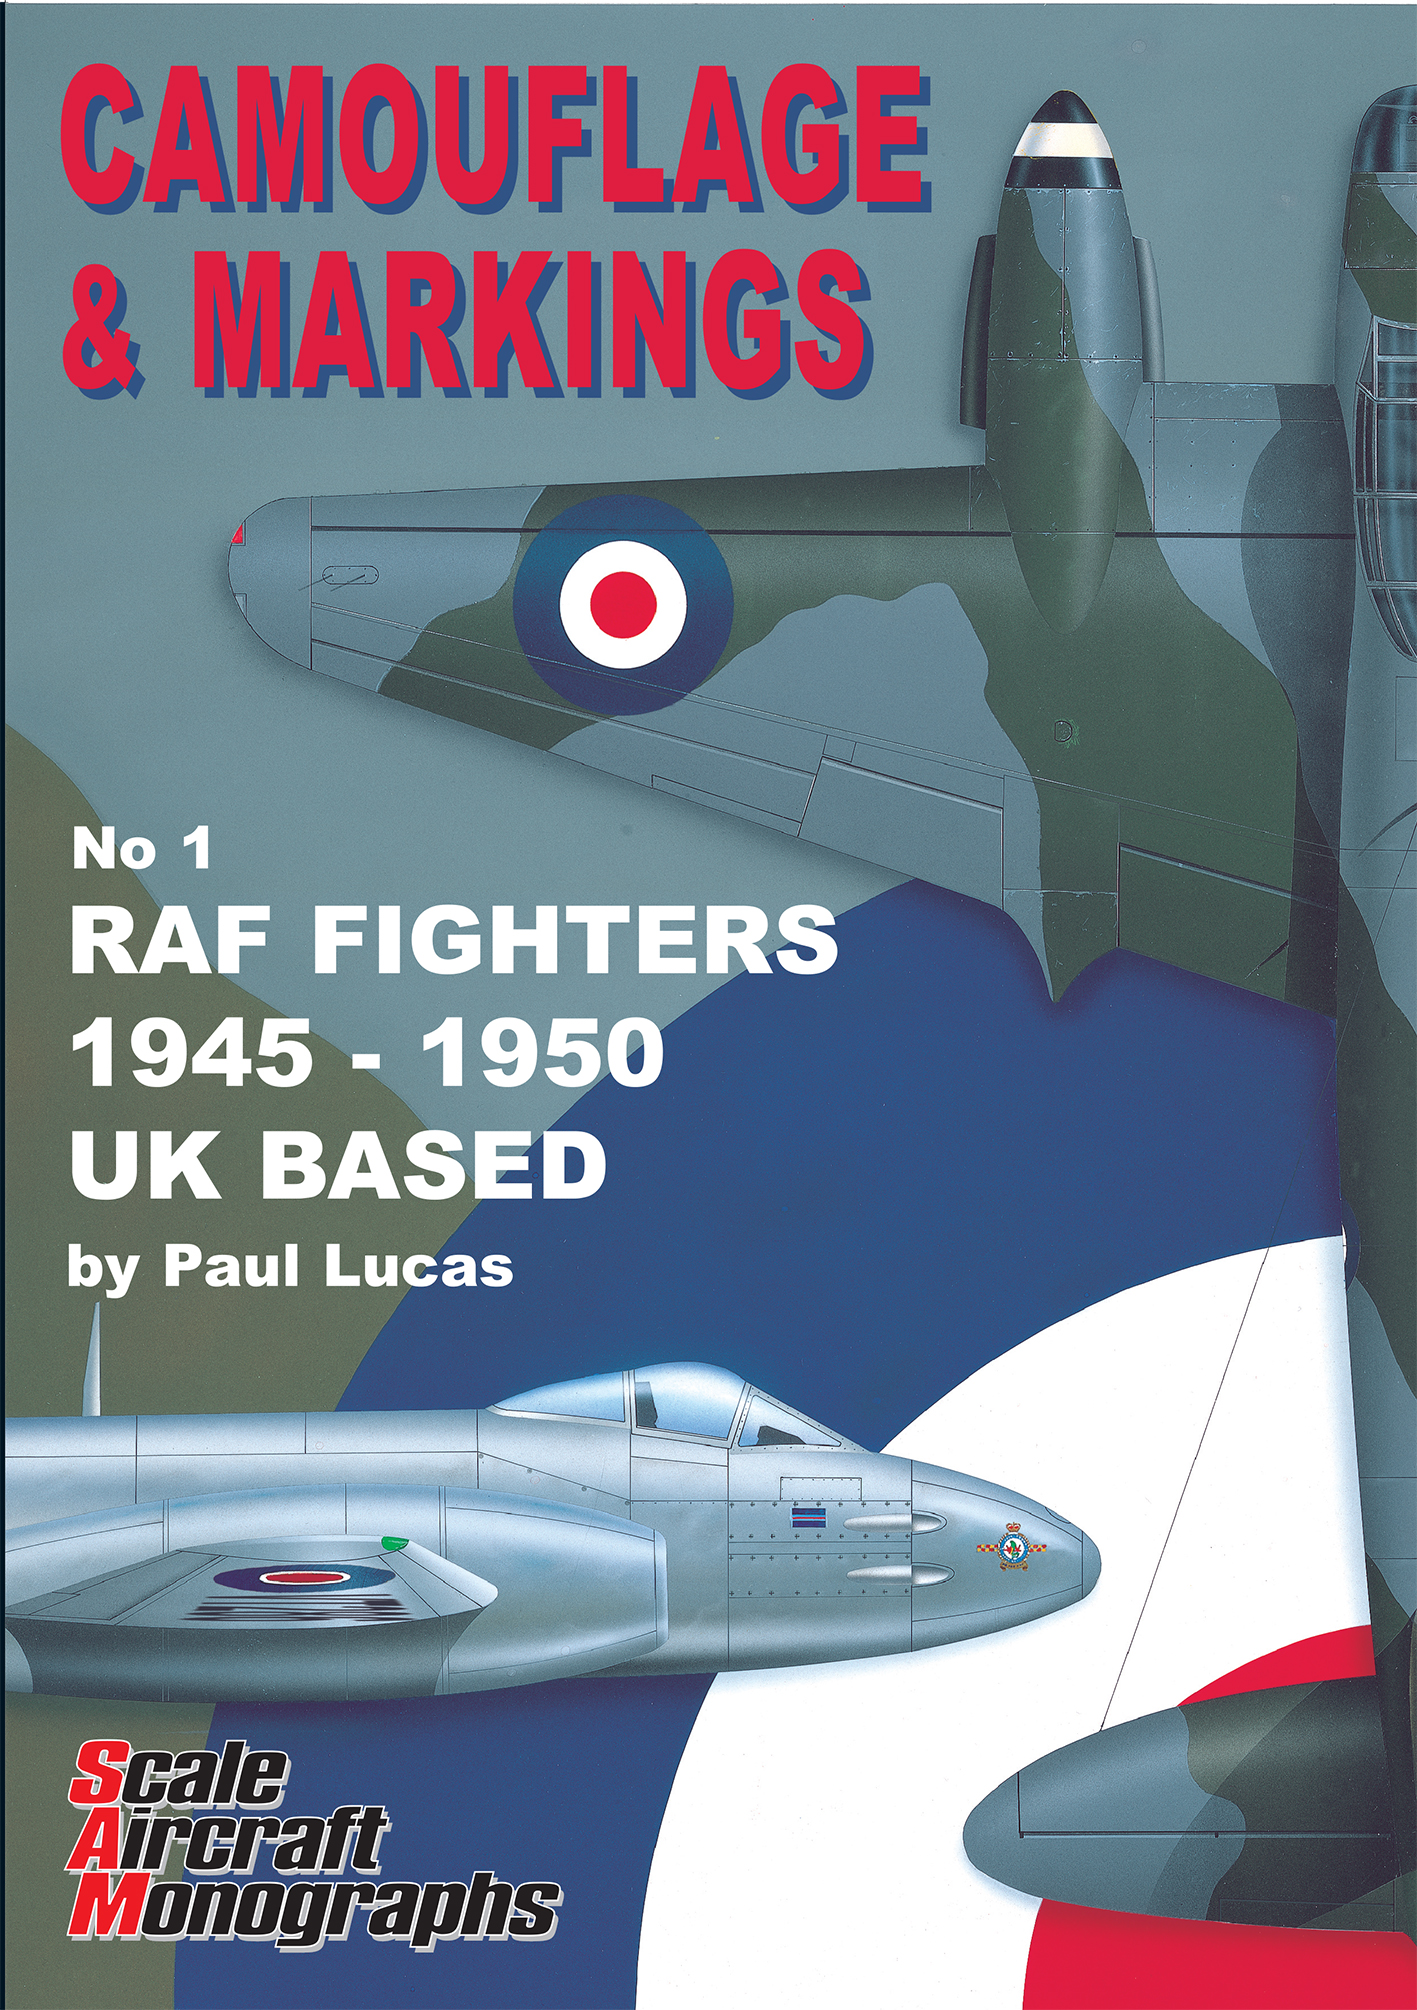 Guideline Publications Ltd Camouflage & Markings no 1 RAF Fighters 1945 - 1950 UK based 